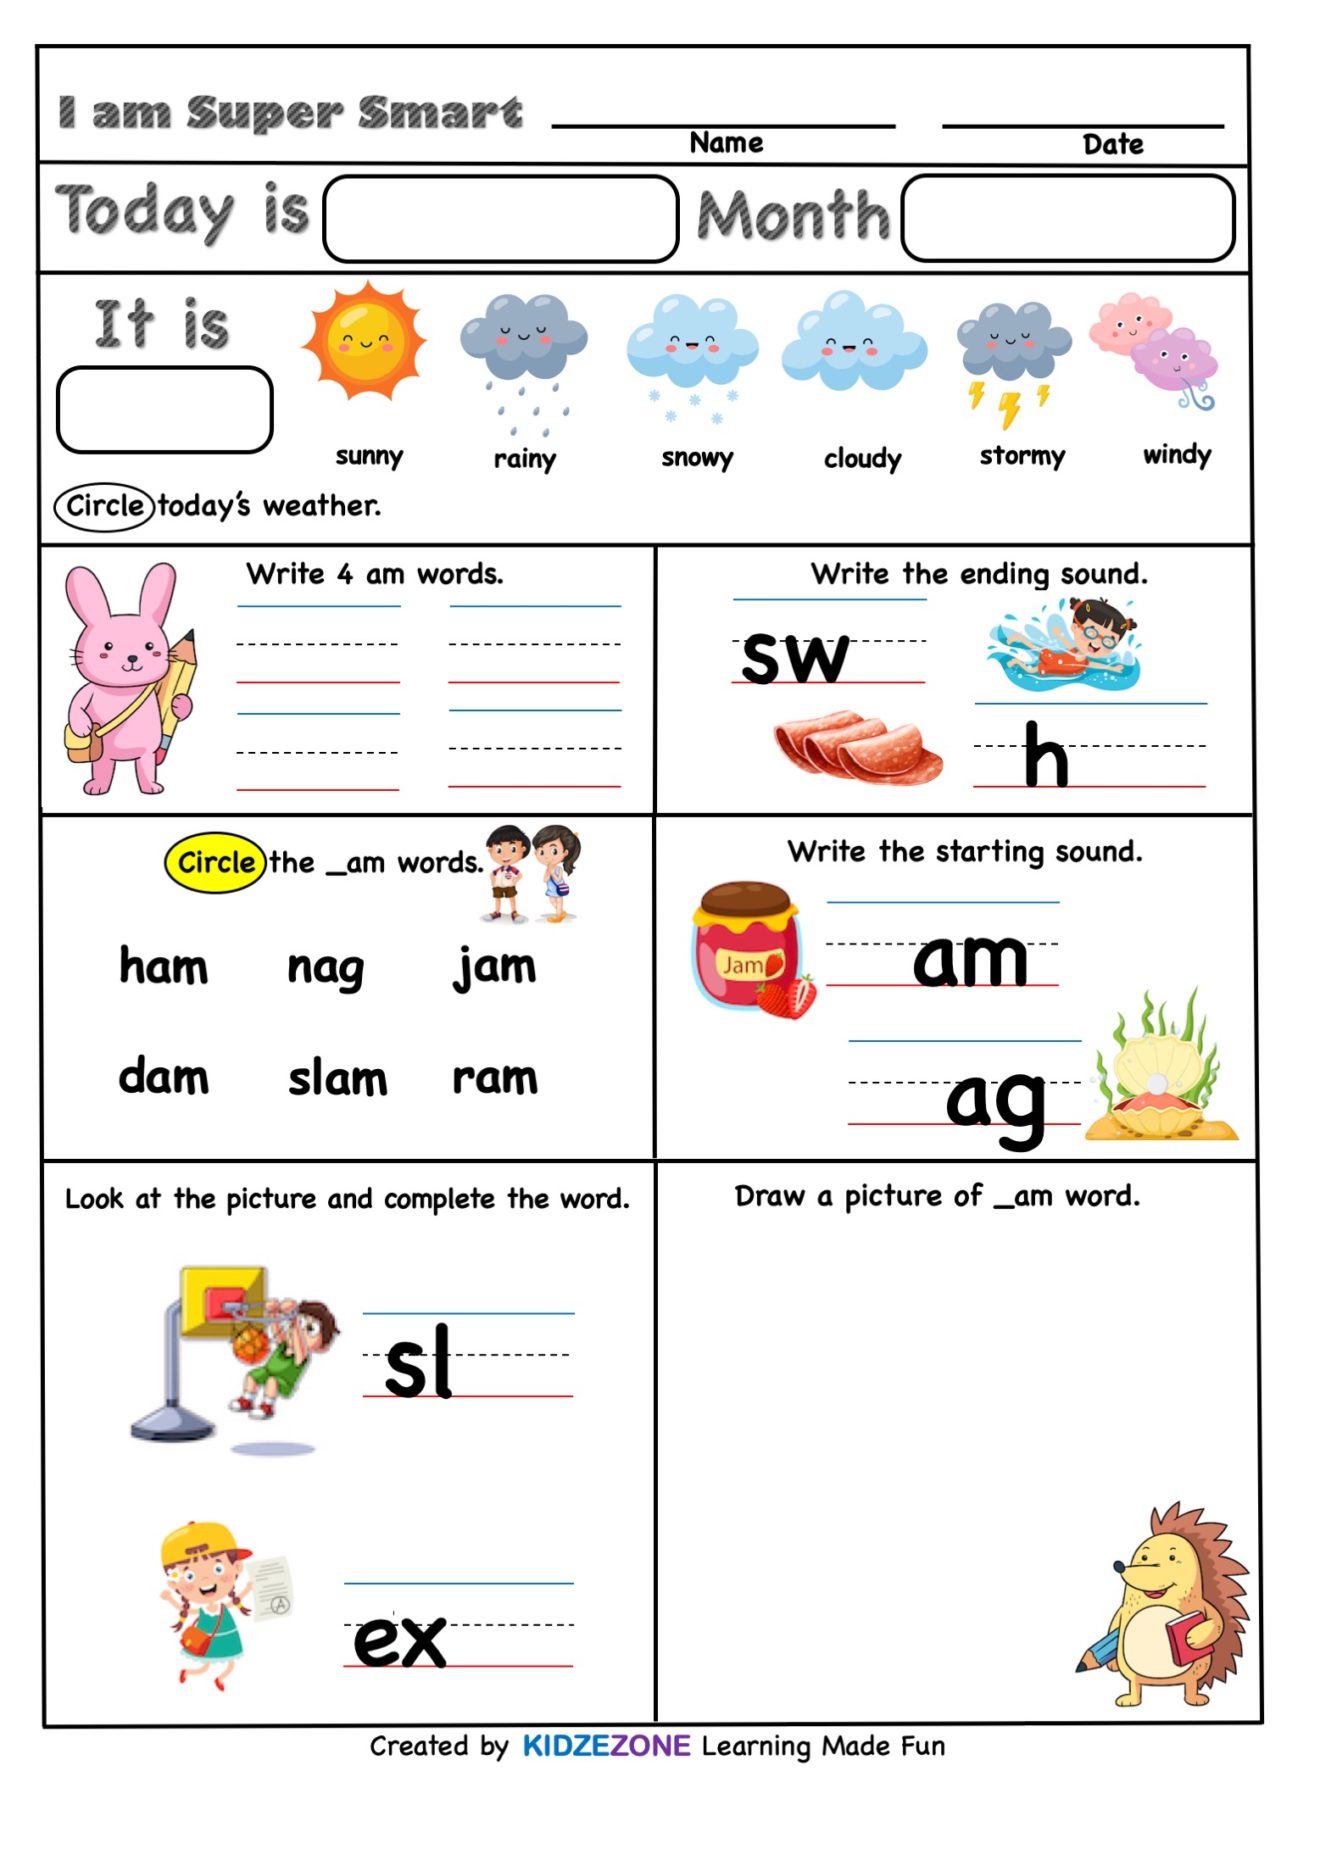 am word family - Super Sheet Kindergarten worksheet